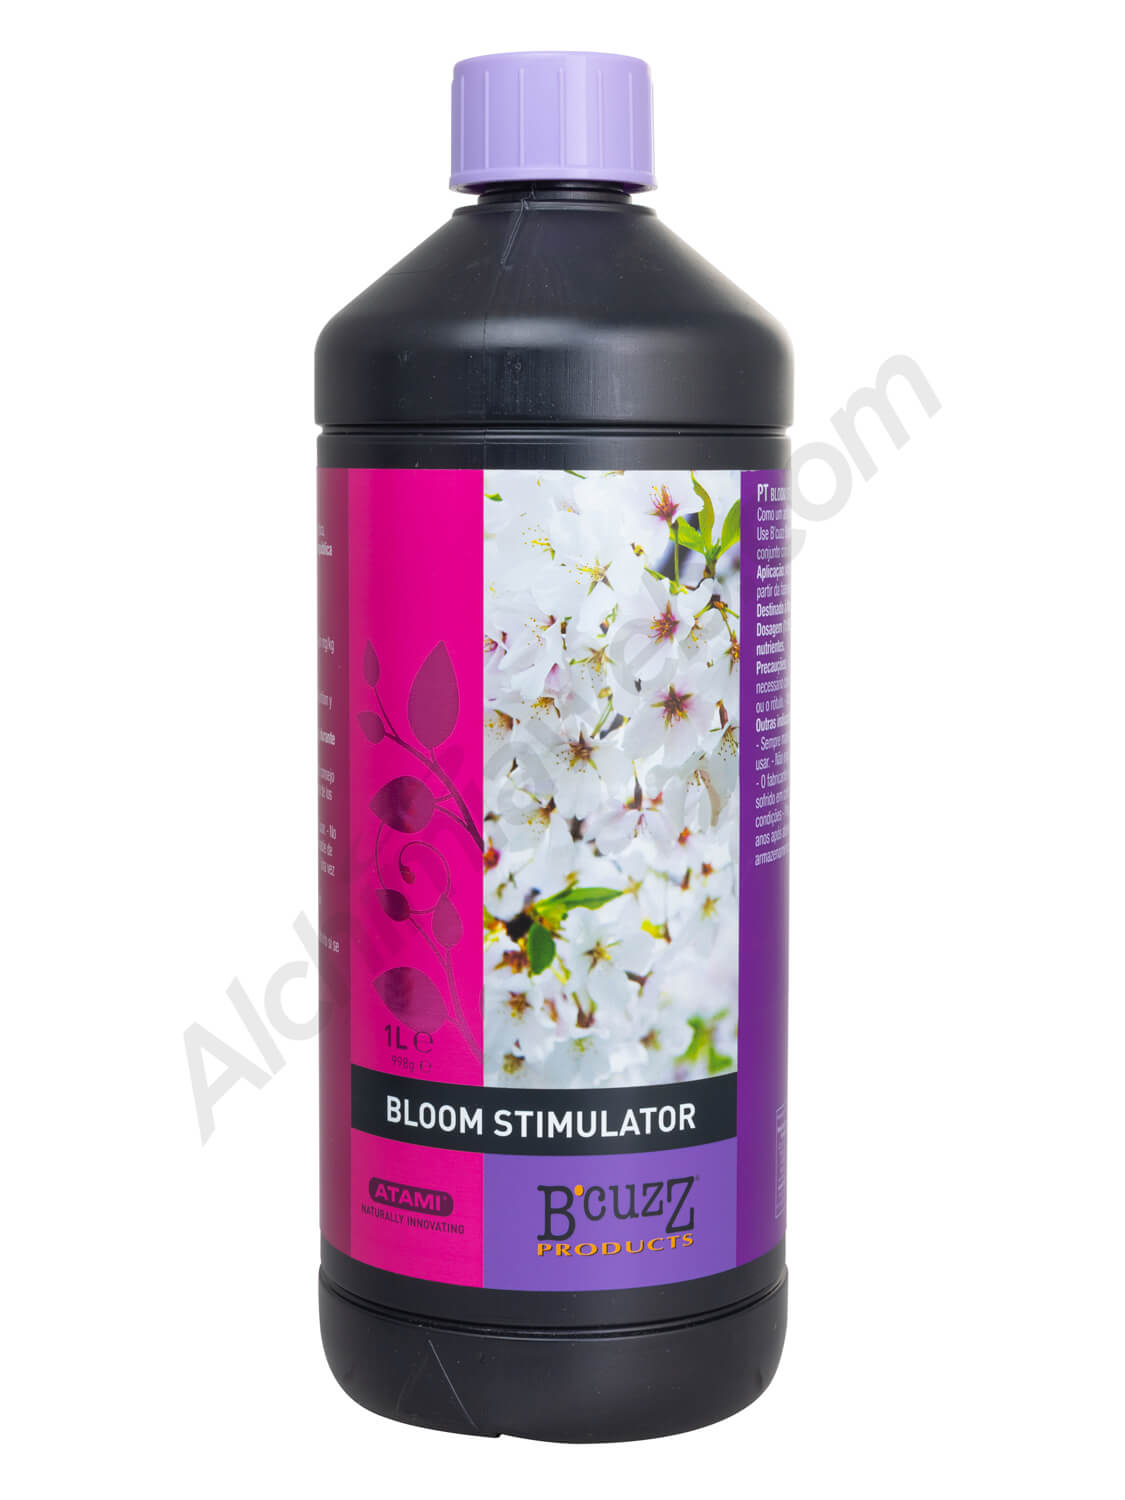 Atami B’Cuzz Bloom Stimulator